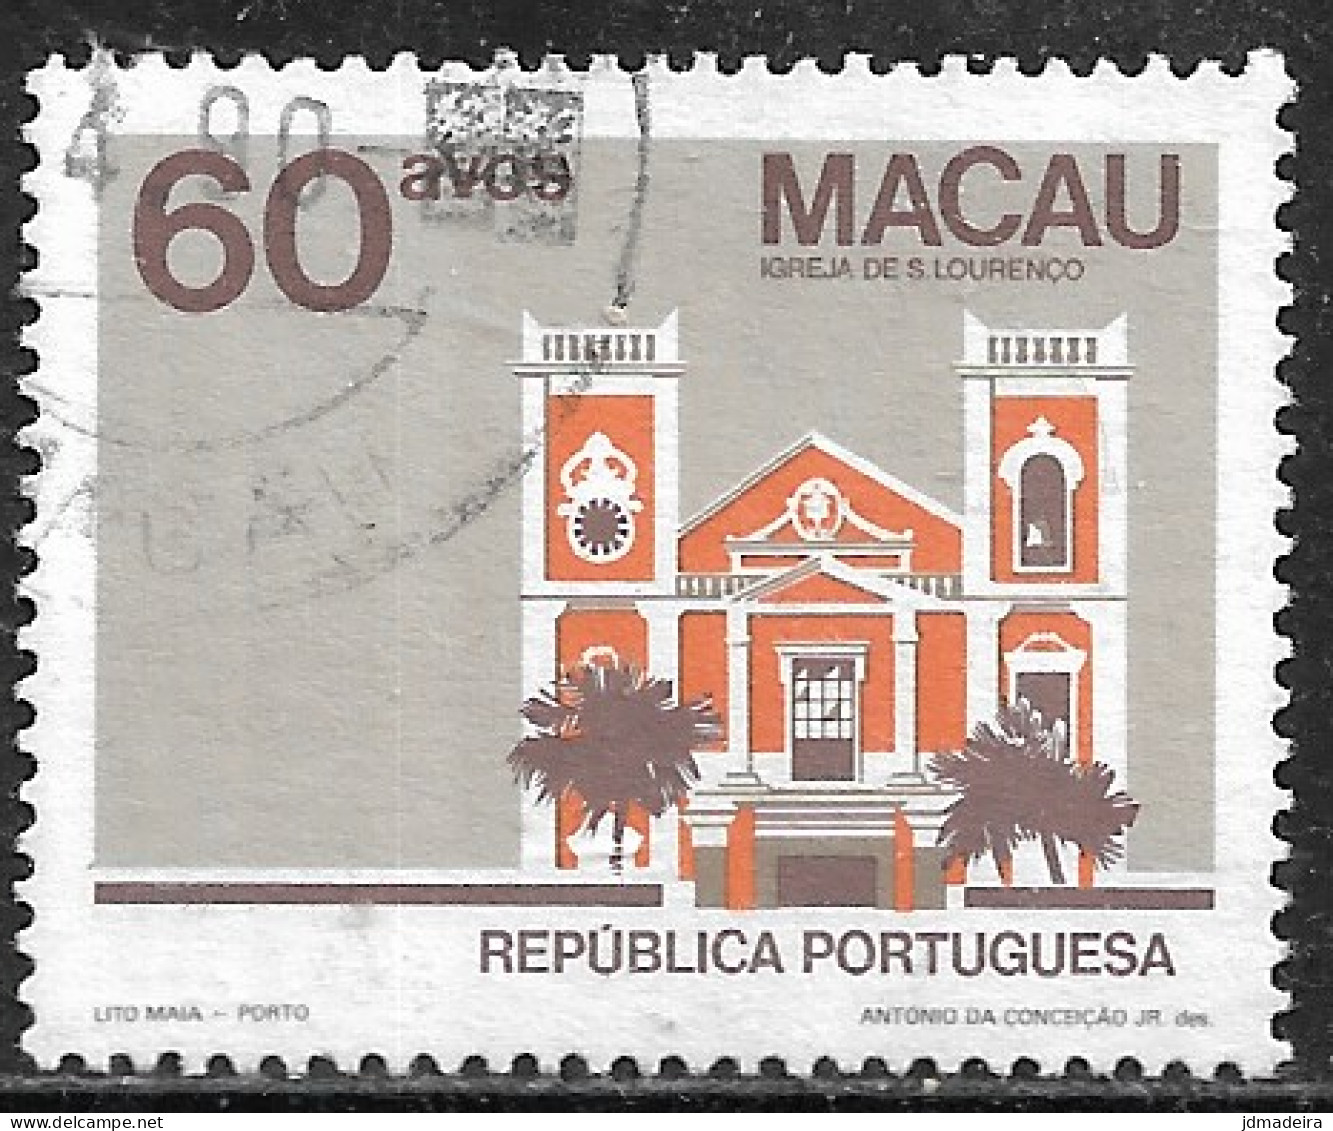 Macau Macao – 1984 Public Buildings 60 Avos No Year Scarce Variety Used Stamp - Usados